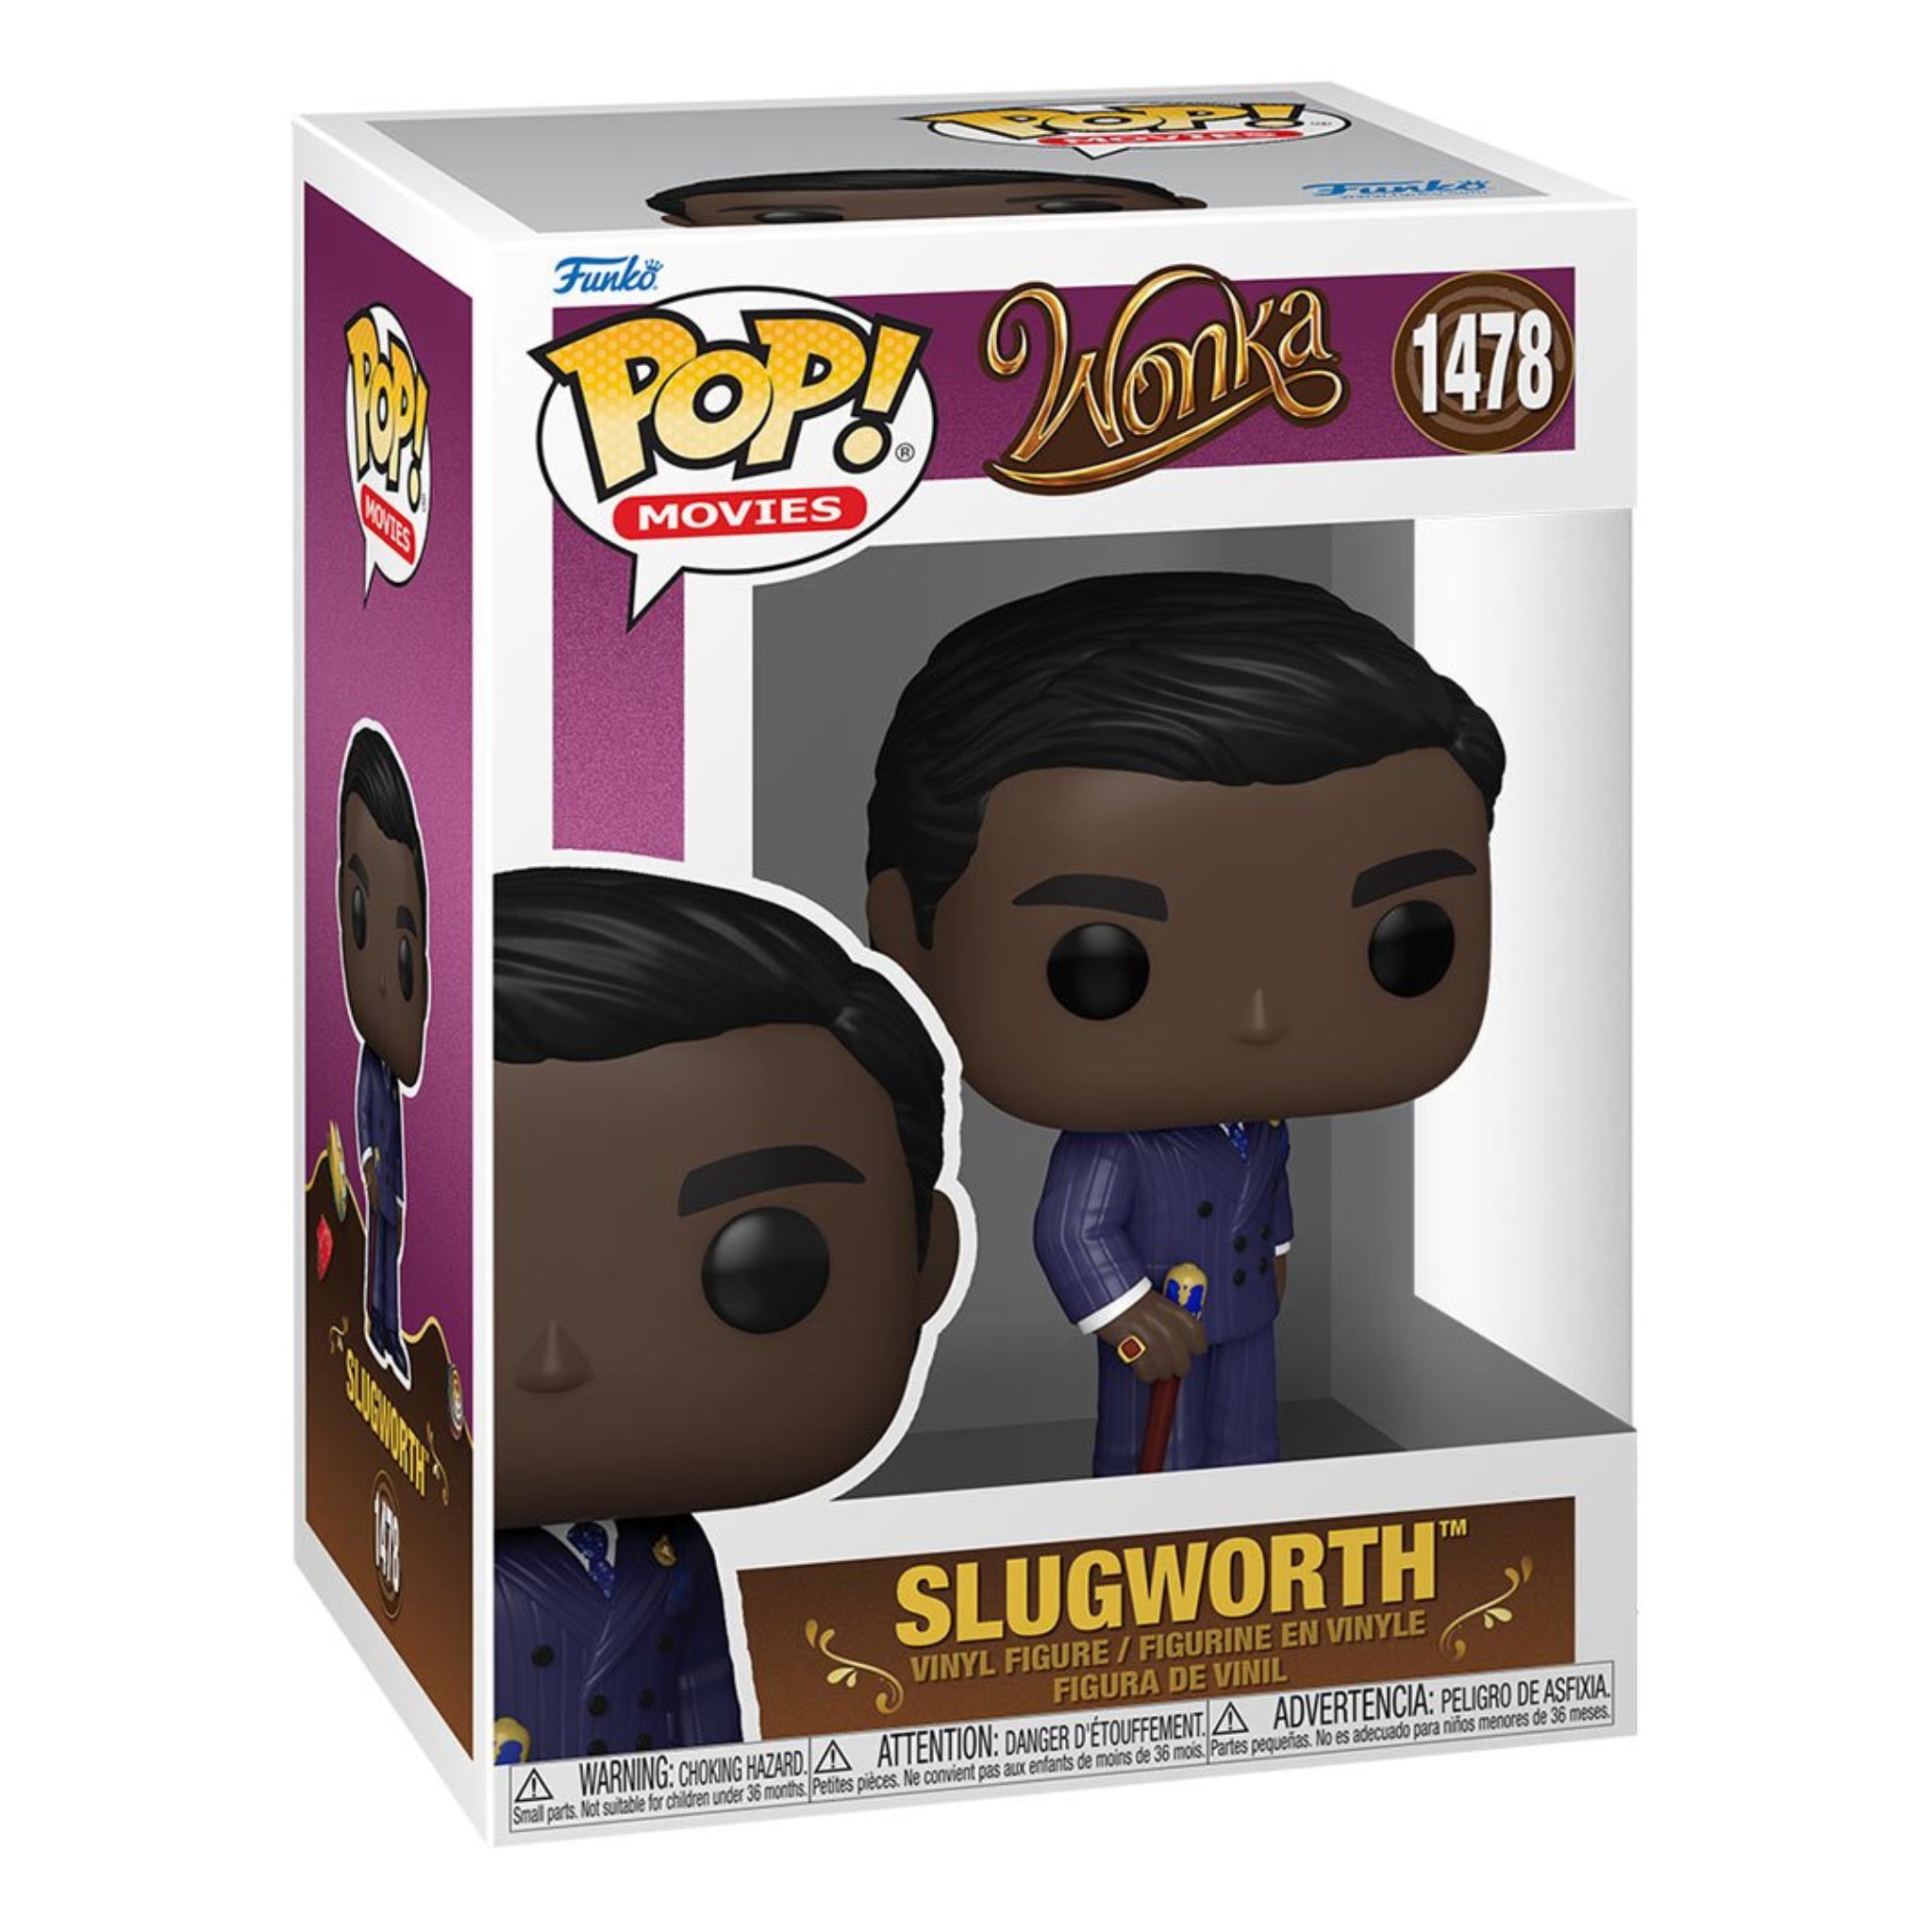 Slugworth Funko Pop!